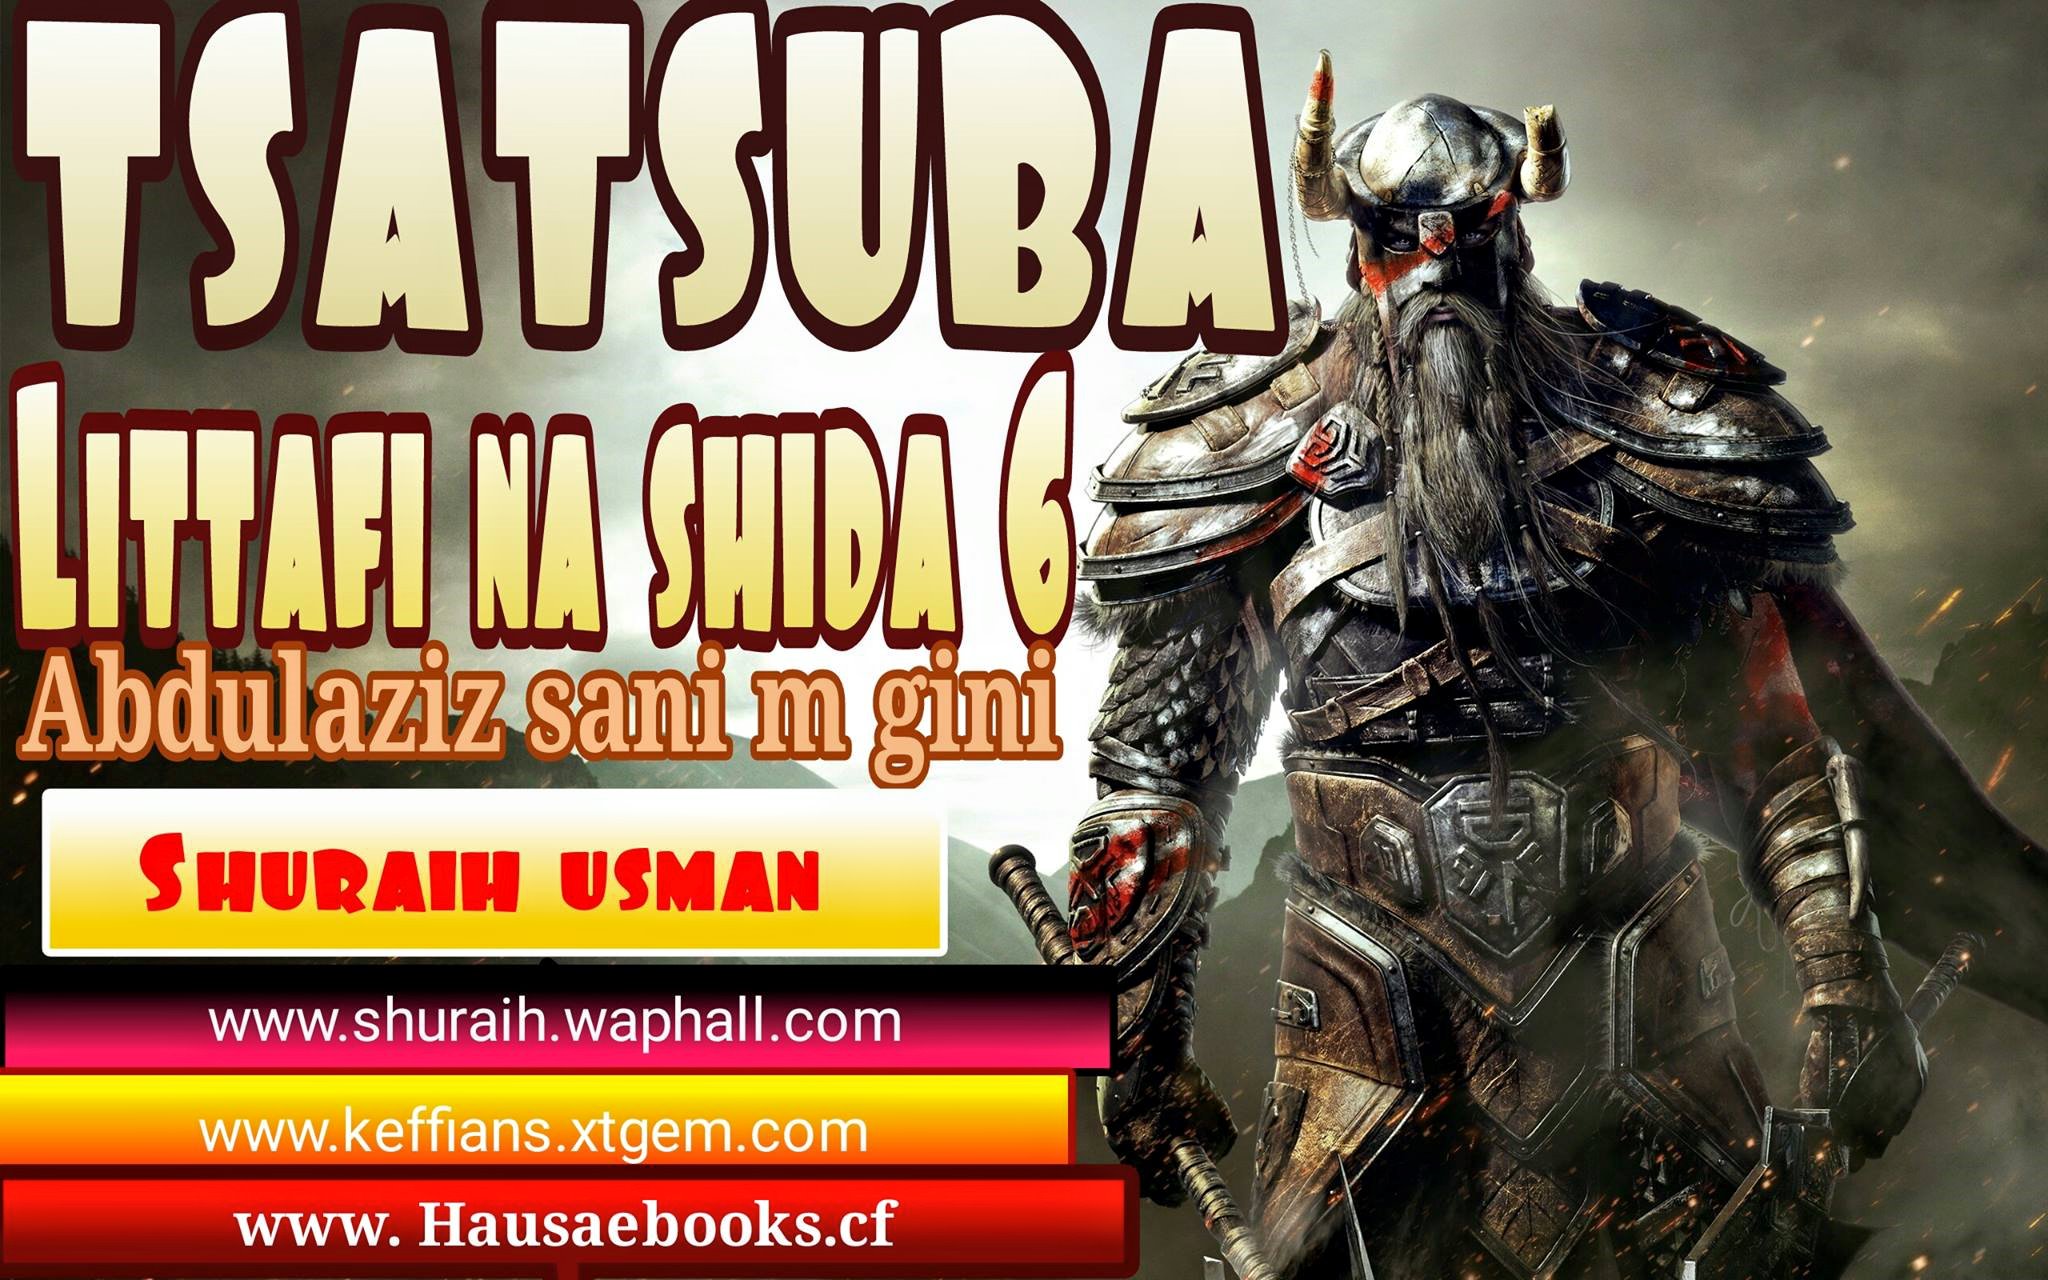 hausaebooks:- TSATSUBA littafi na Shida 6 na Abdulaziz Sani m gini